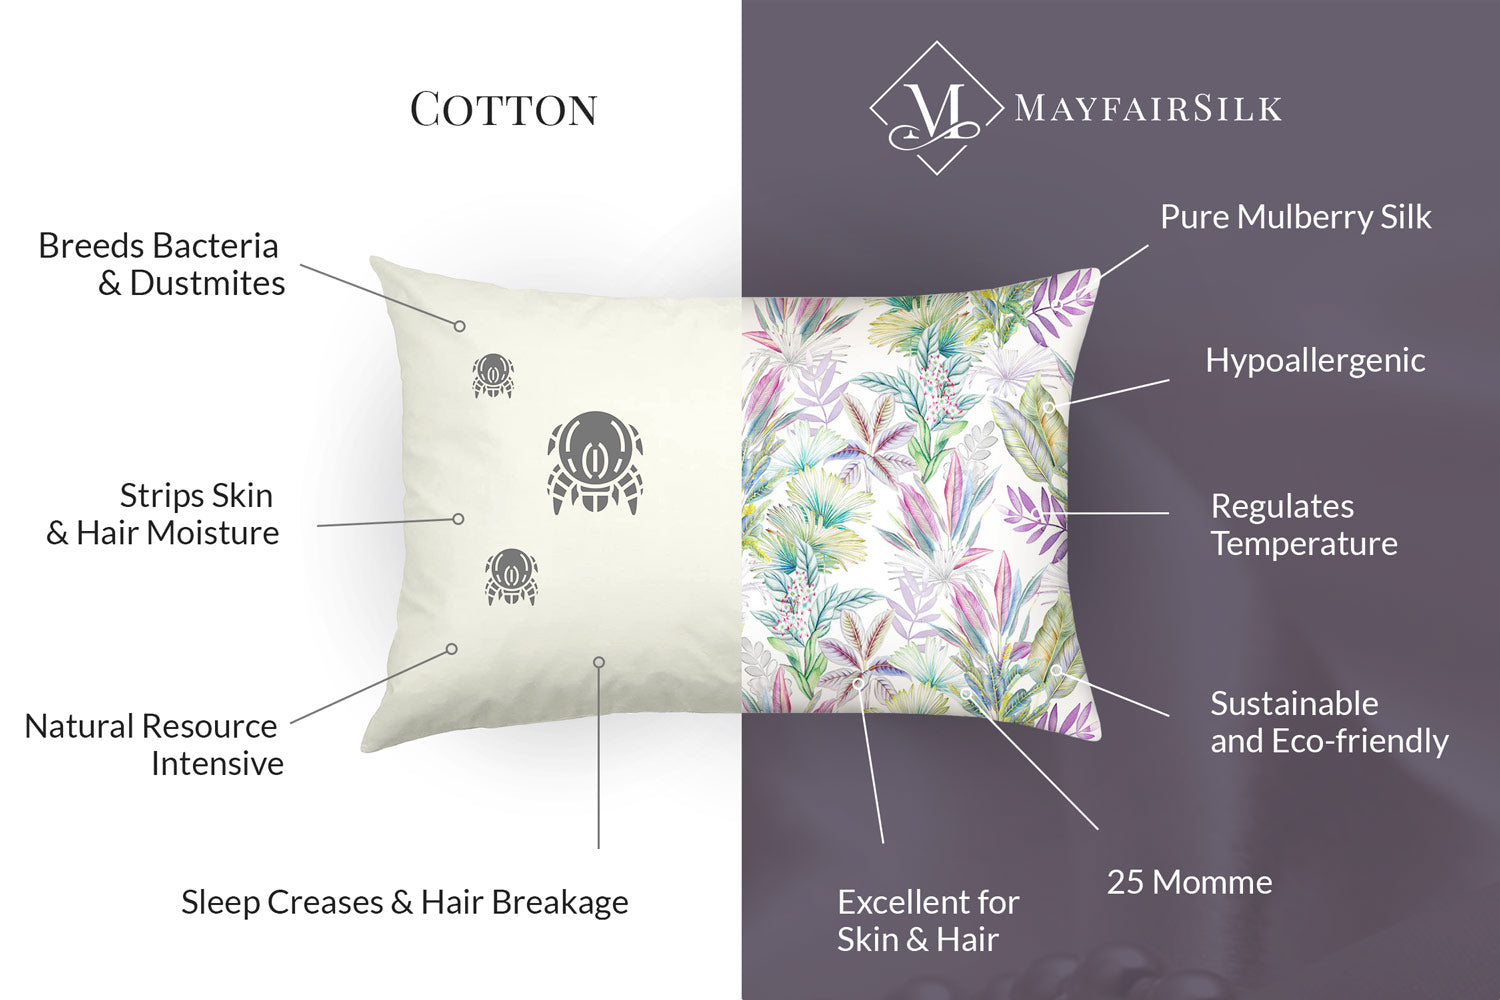 5 Silk Pillowcase Benefits for Your Hair & Skin